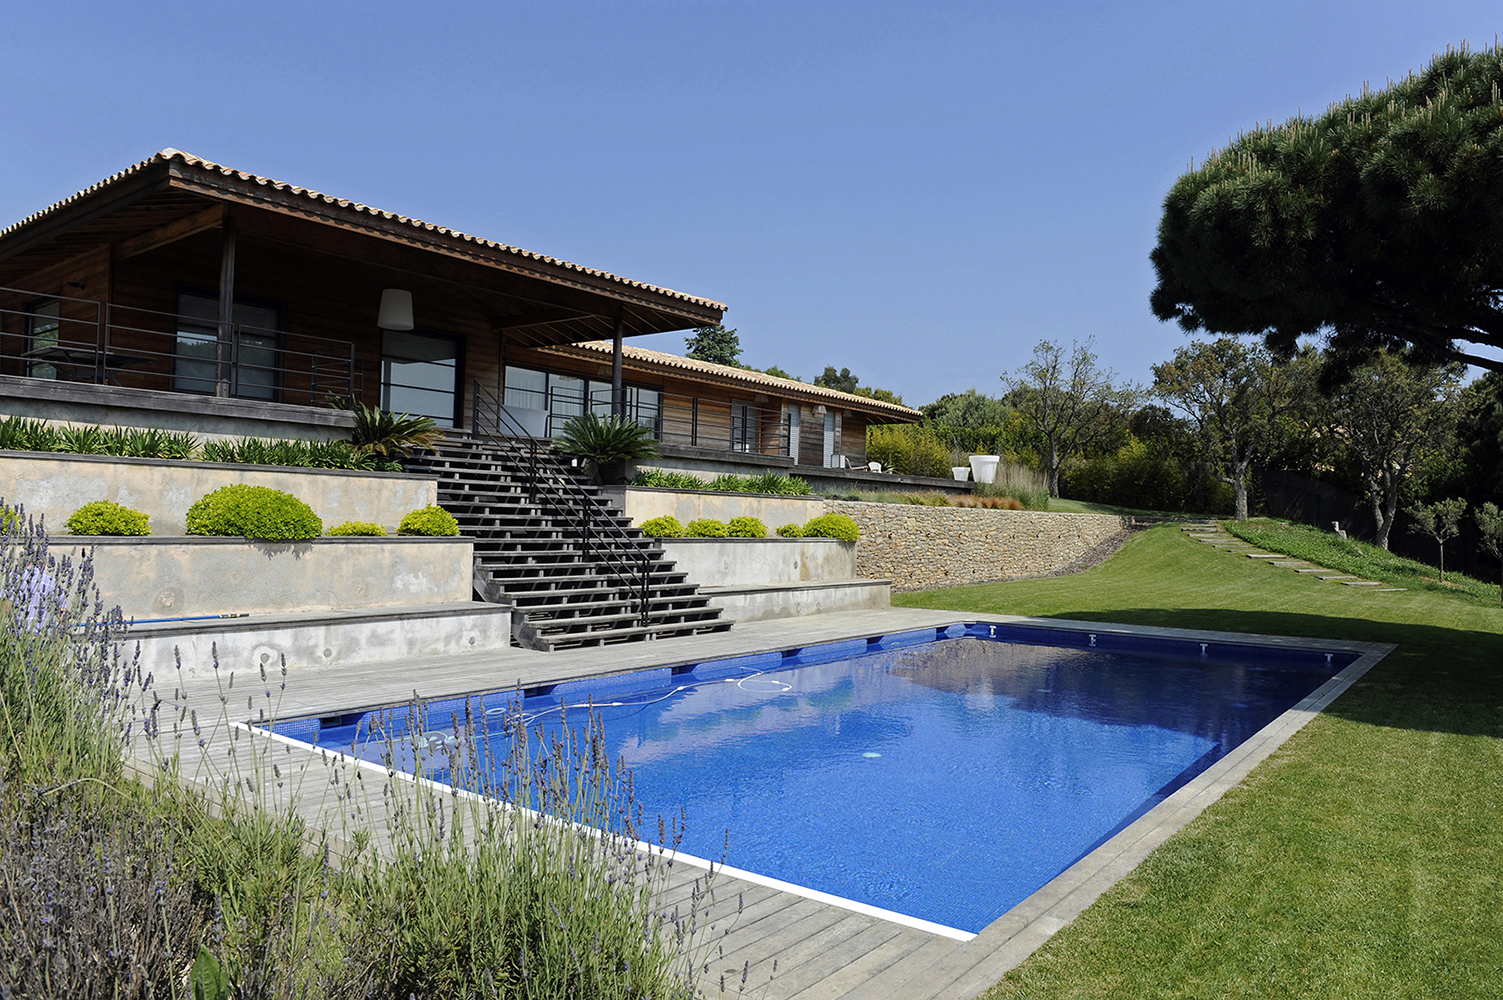 Presse-piscine, Piscines et Spa Magazine, Toulon - Architecture, piscine - Pascal GUIRAUD